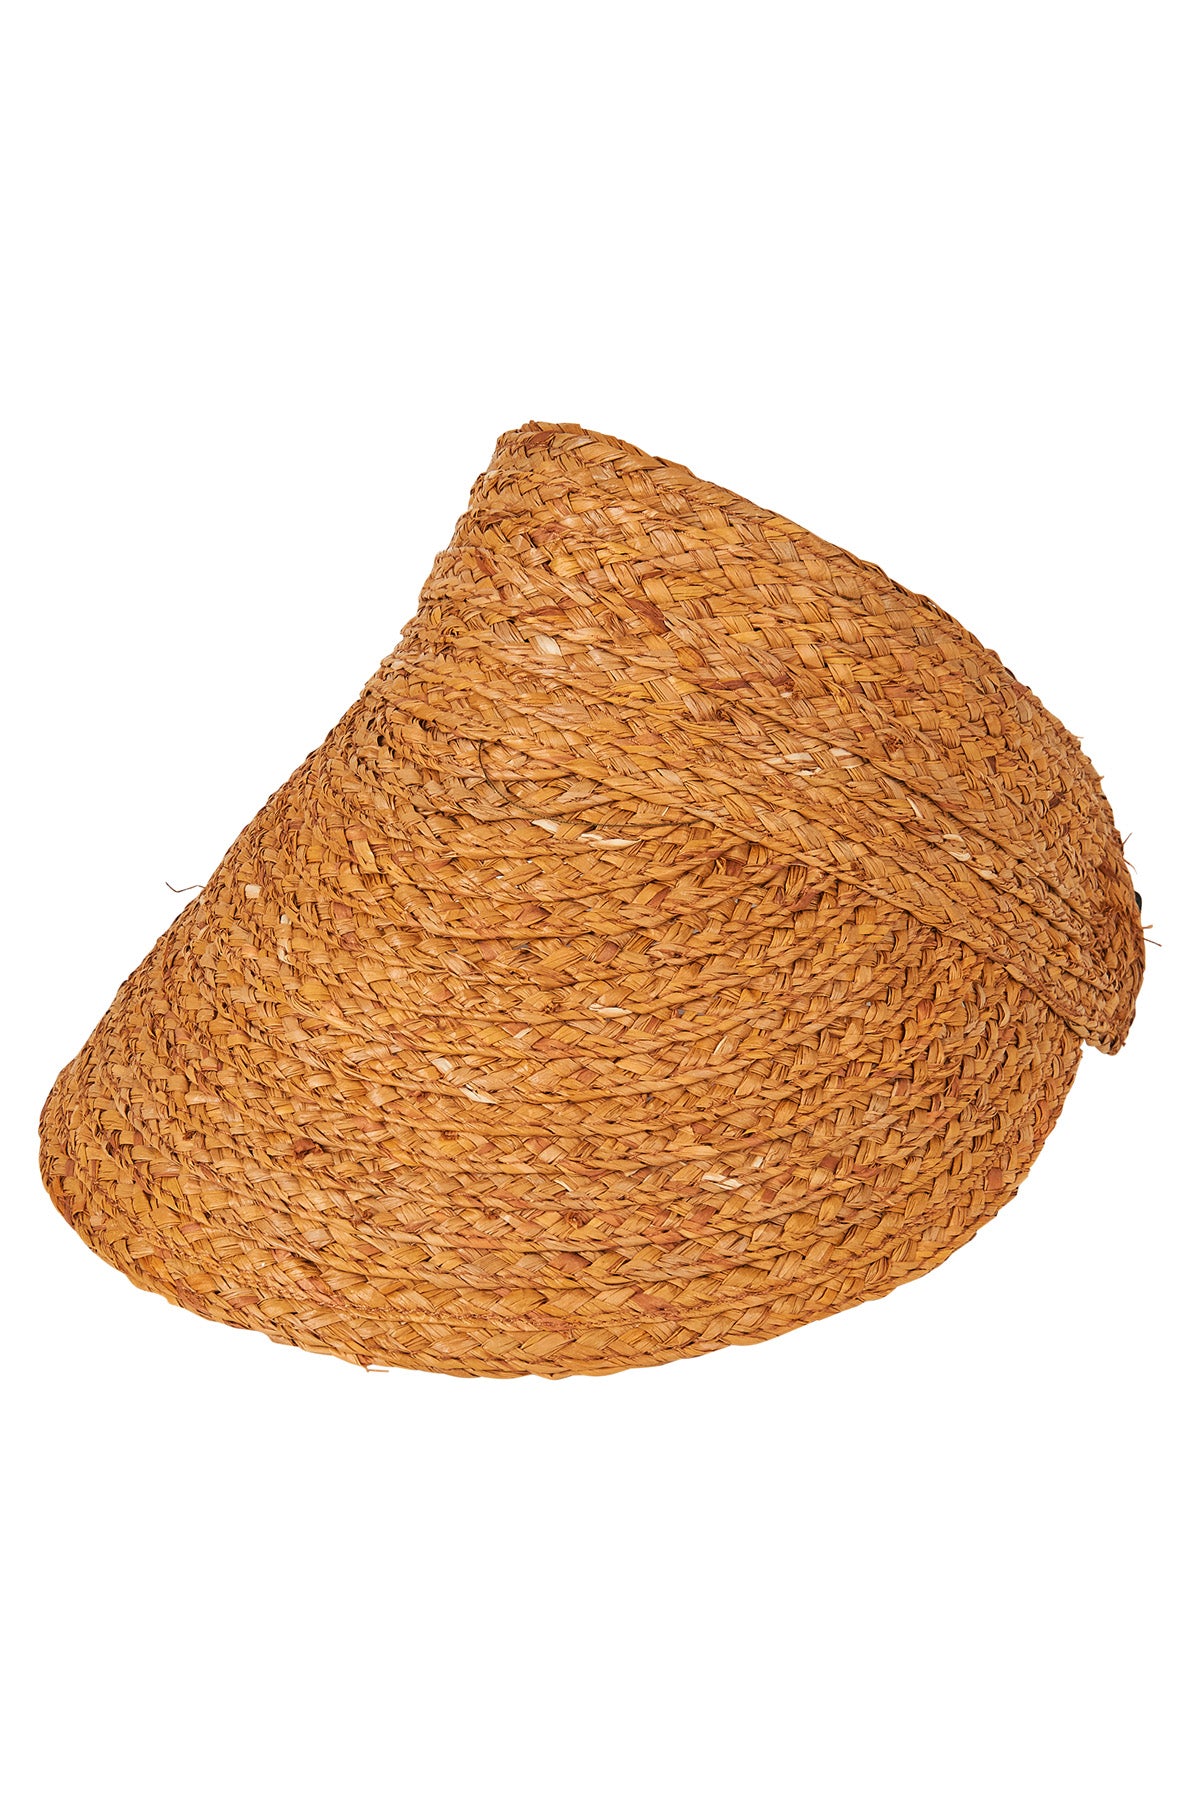 Nala Peak Hat - Tan - eb&ive Headwear